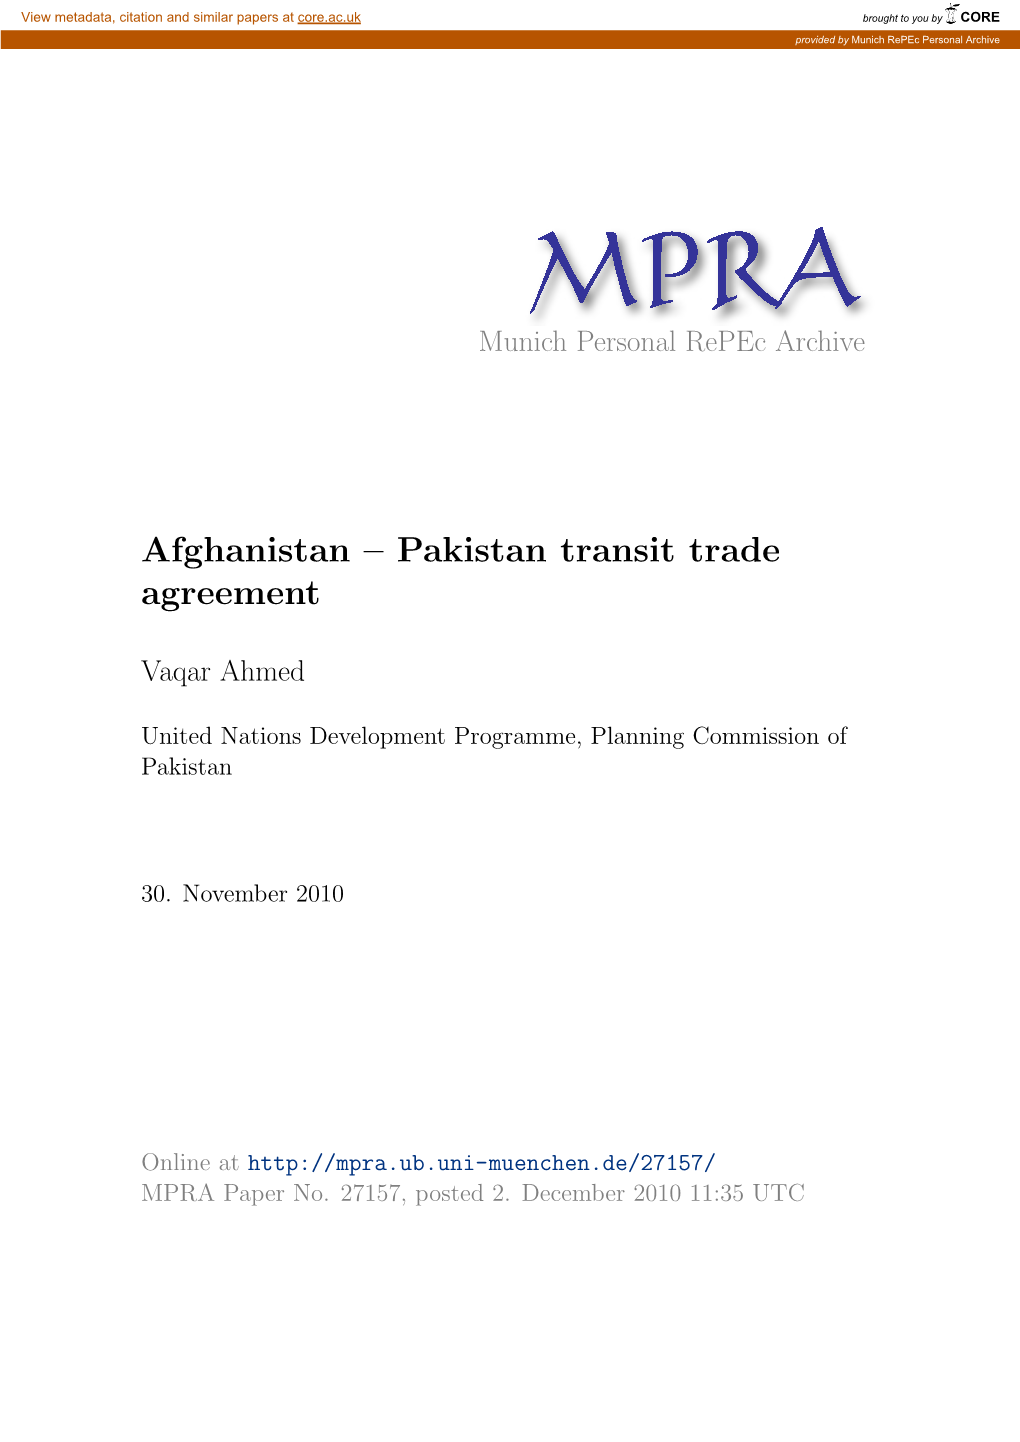 Afghanistan – Pakistan Transit Trade Agreement